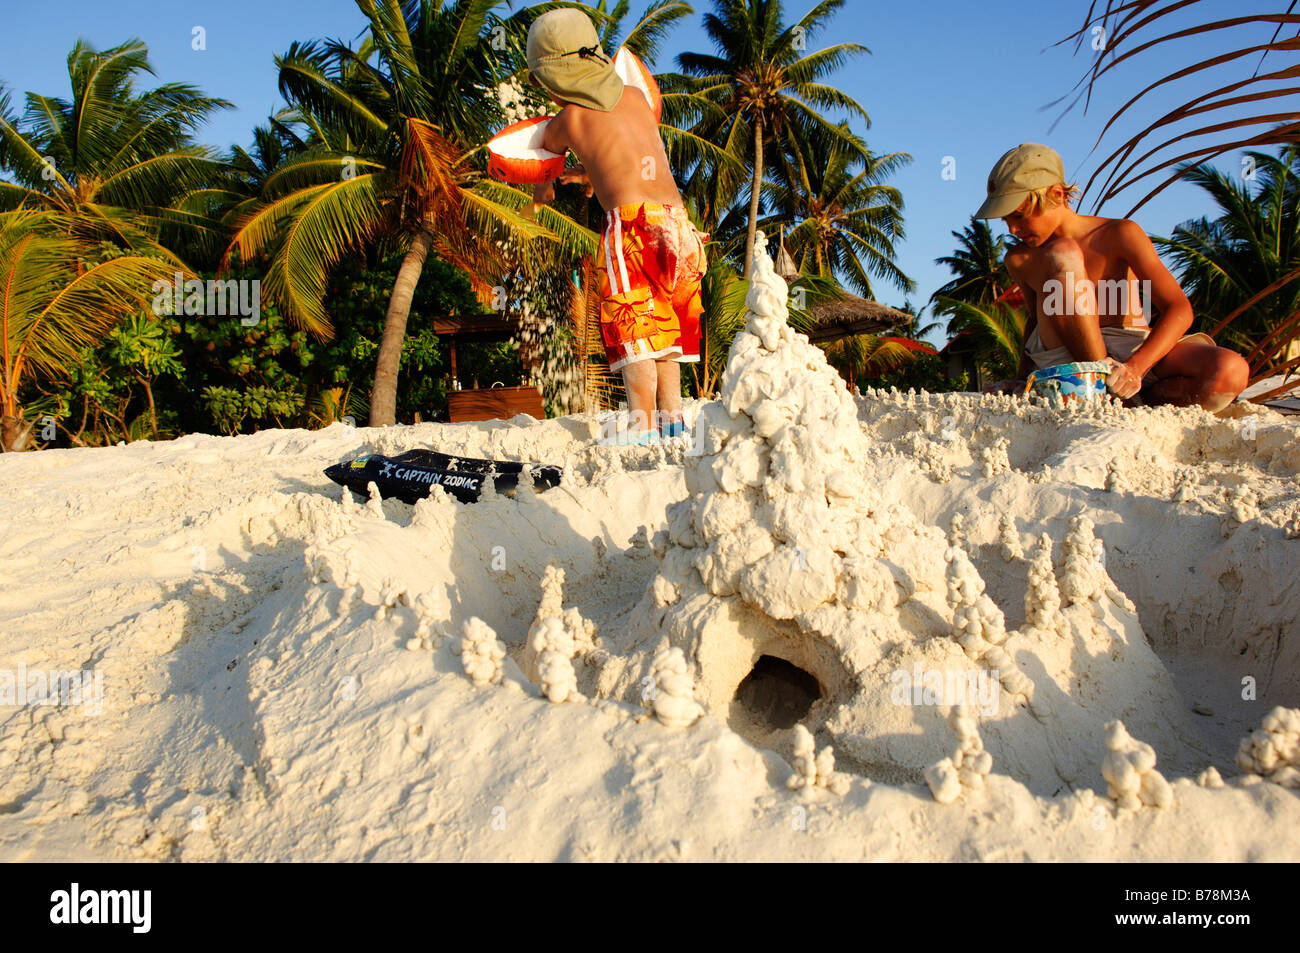 Children building a sand castle on the beach, Kurumba Resort, The Maldives, Indian Ocean Stock Photo